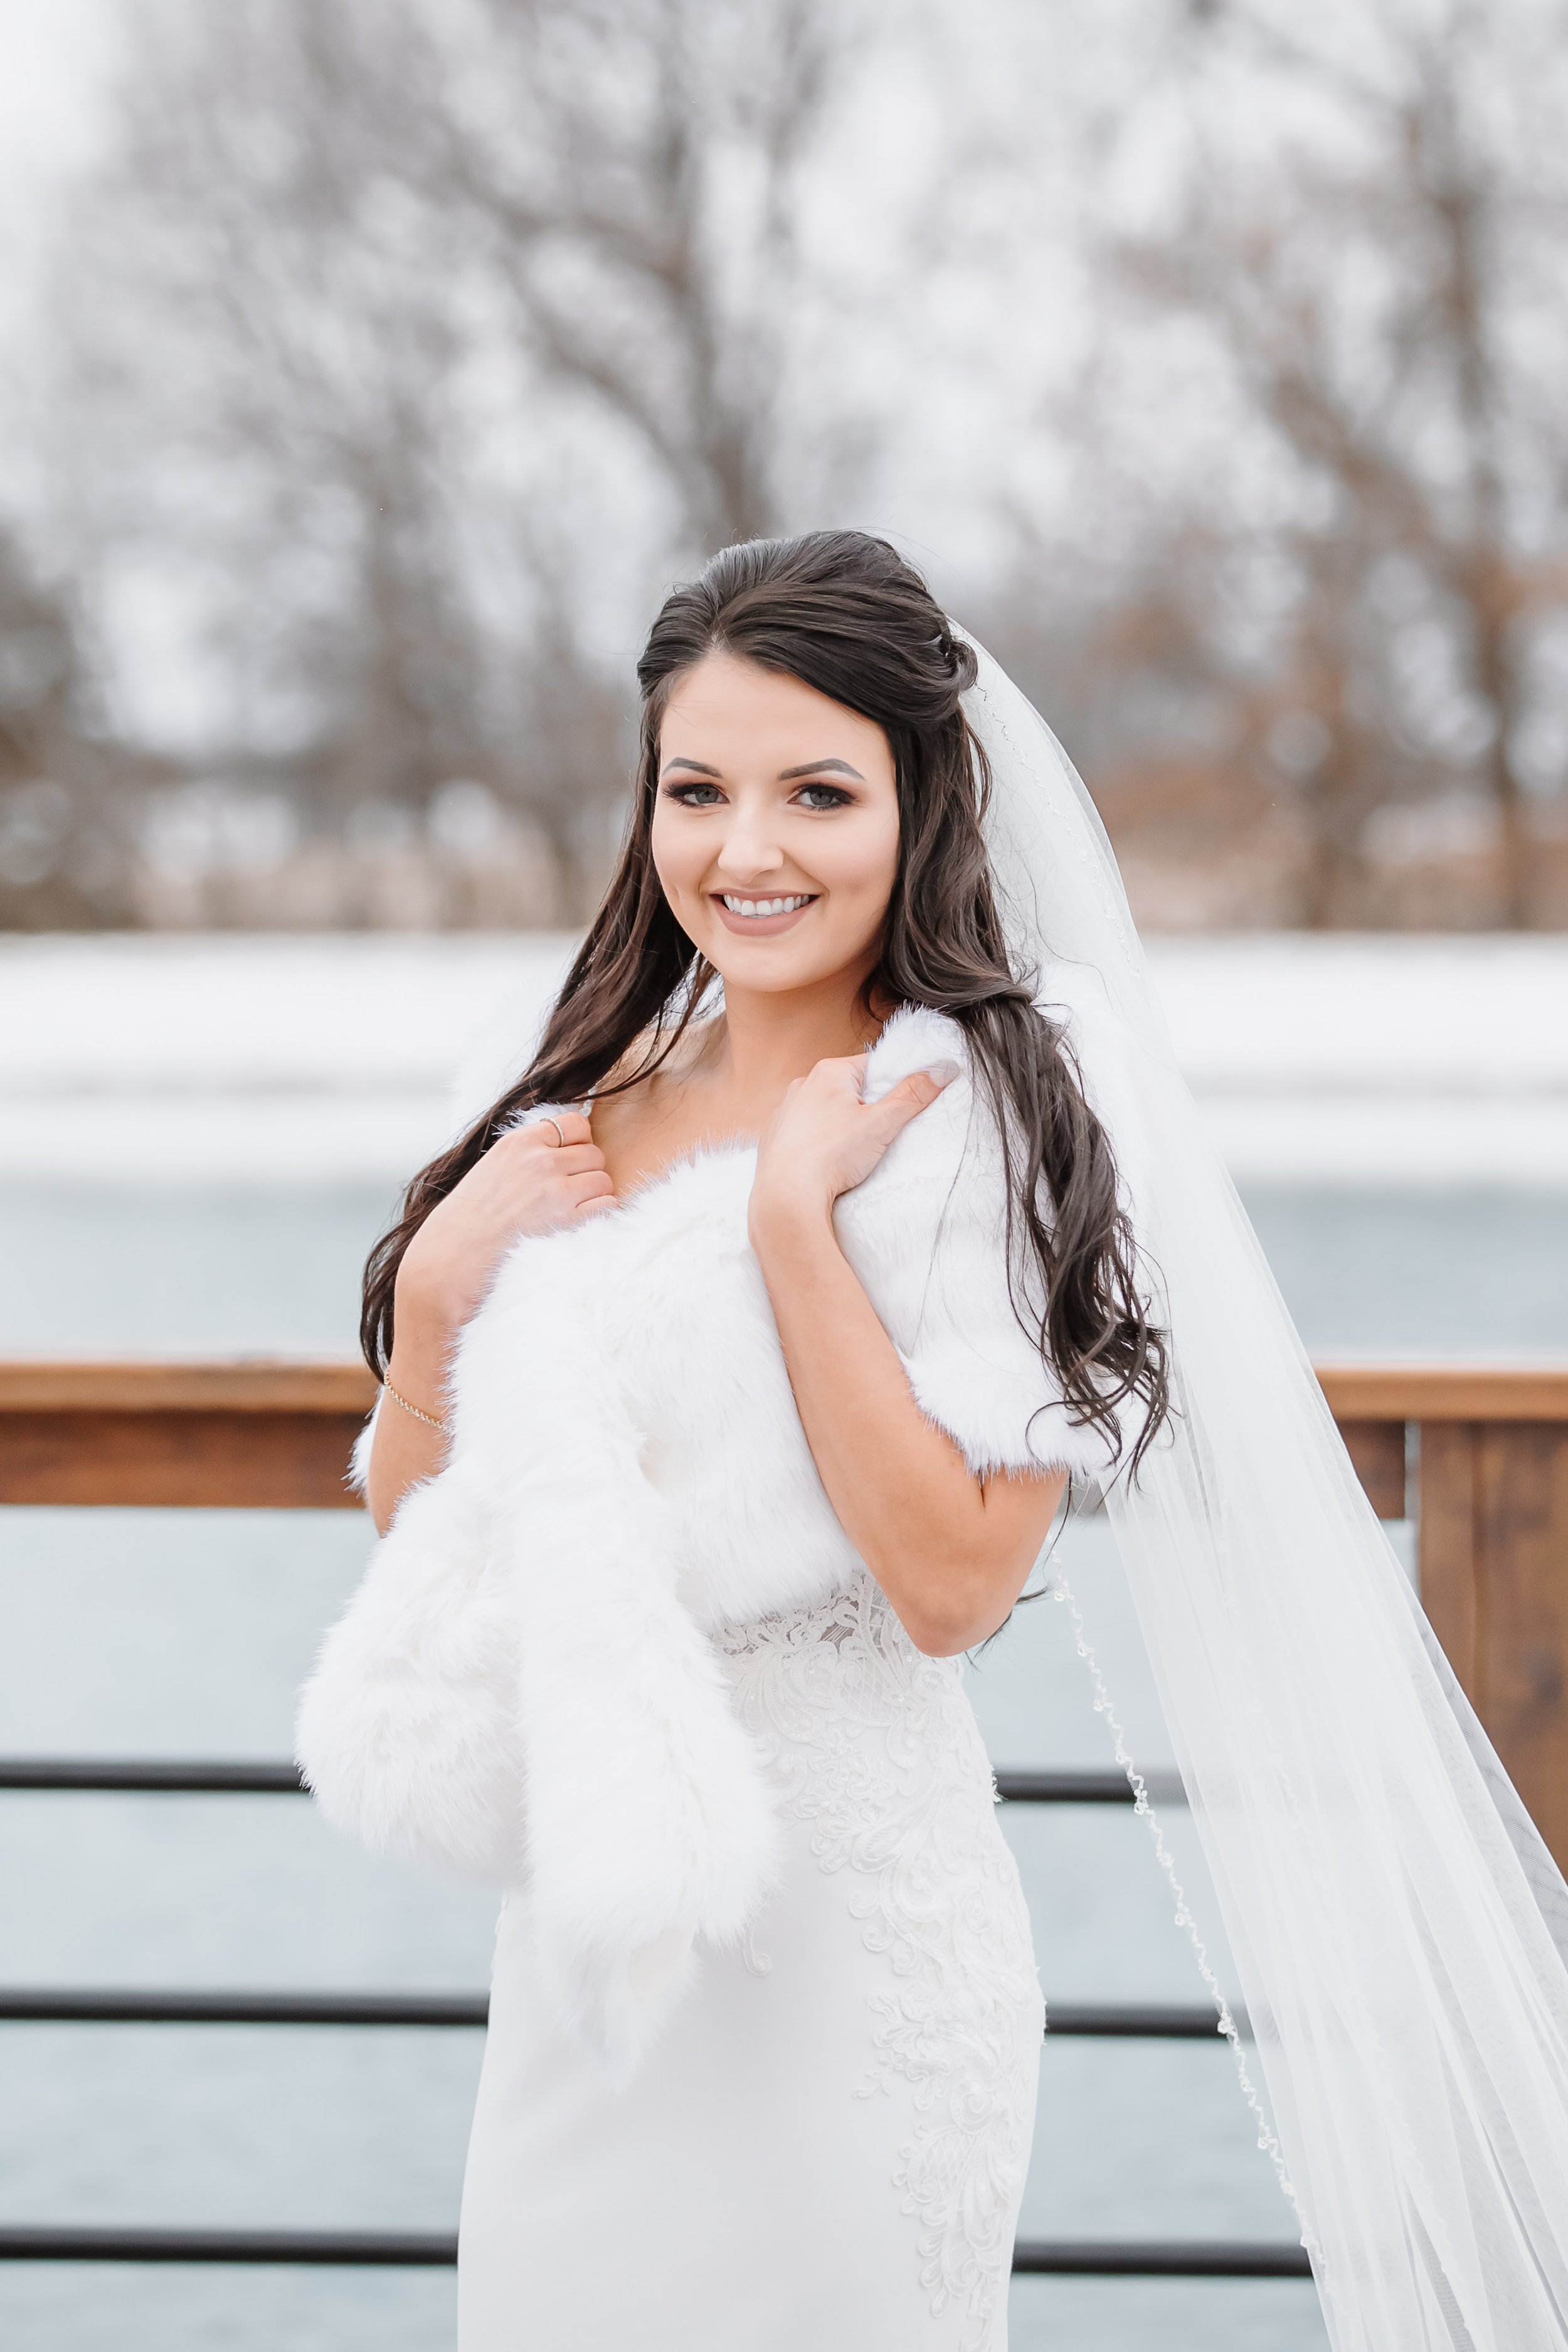 Winter Wedding Missouri Venue Emerson Fields bride winter wedding dress gown fur stole.jpg